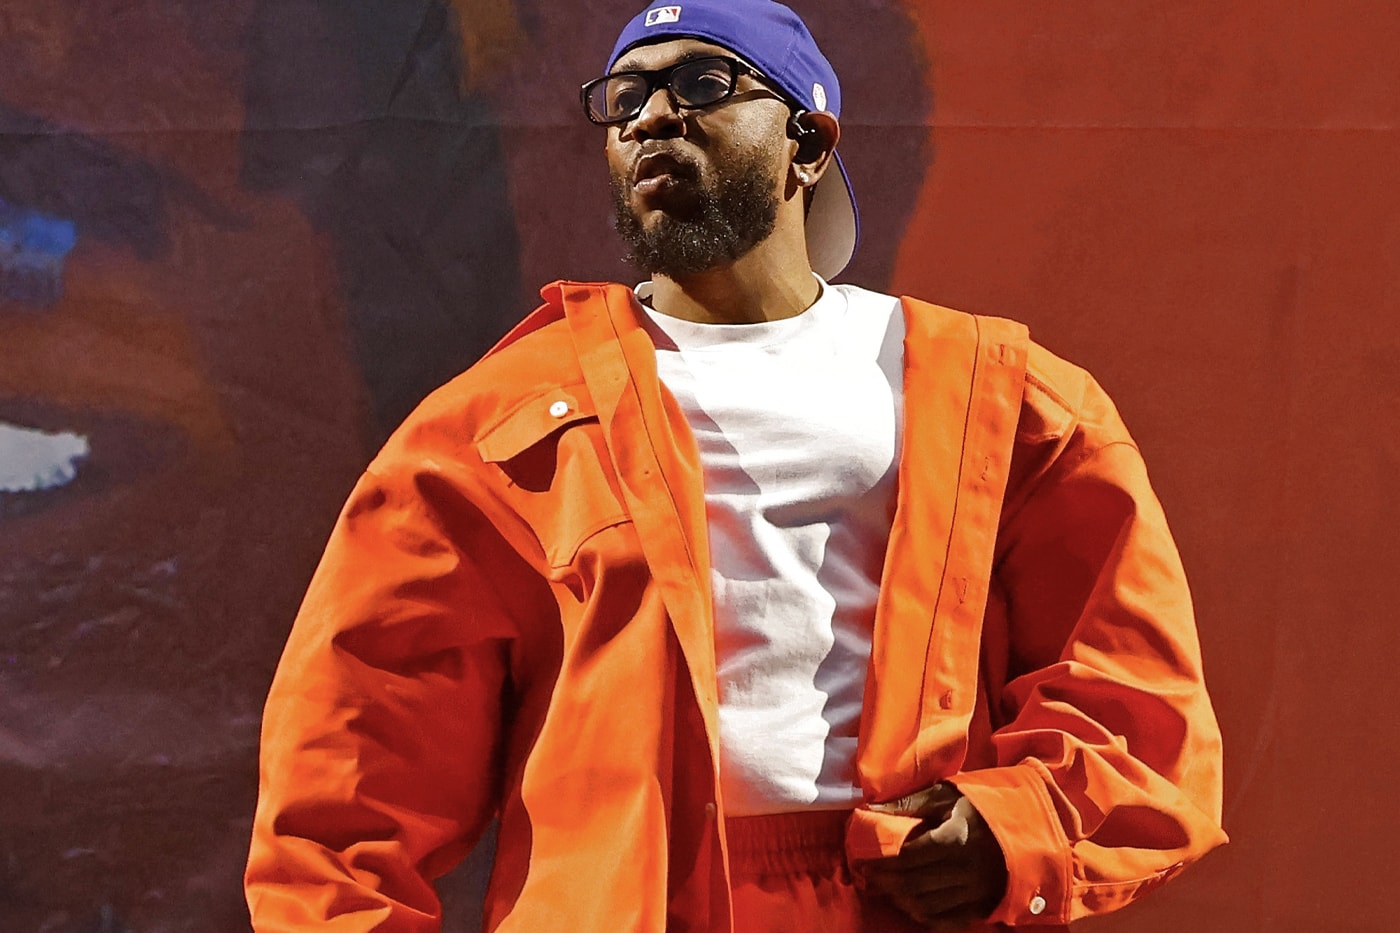 Kendrick Lamar Retaliates to Drake's "Family Matters" With Own Track "Meet the Grahams"